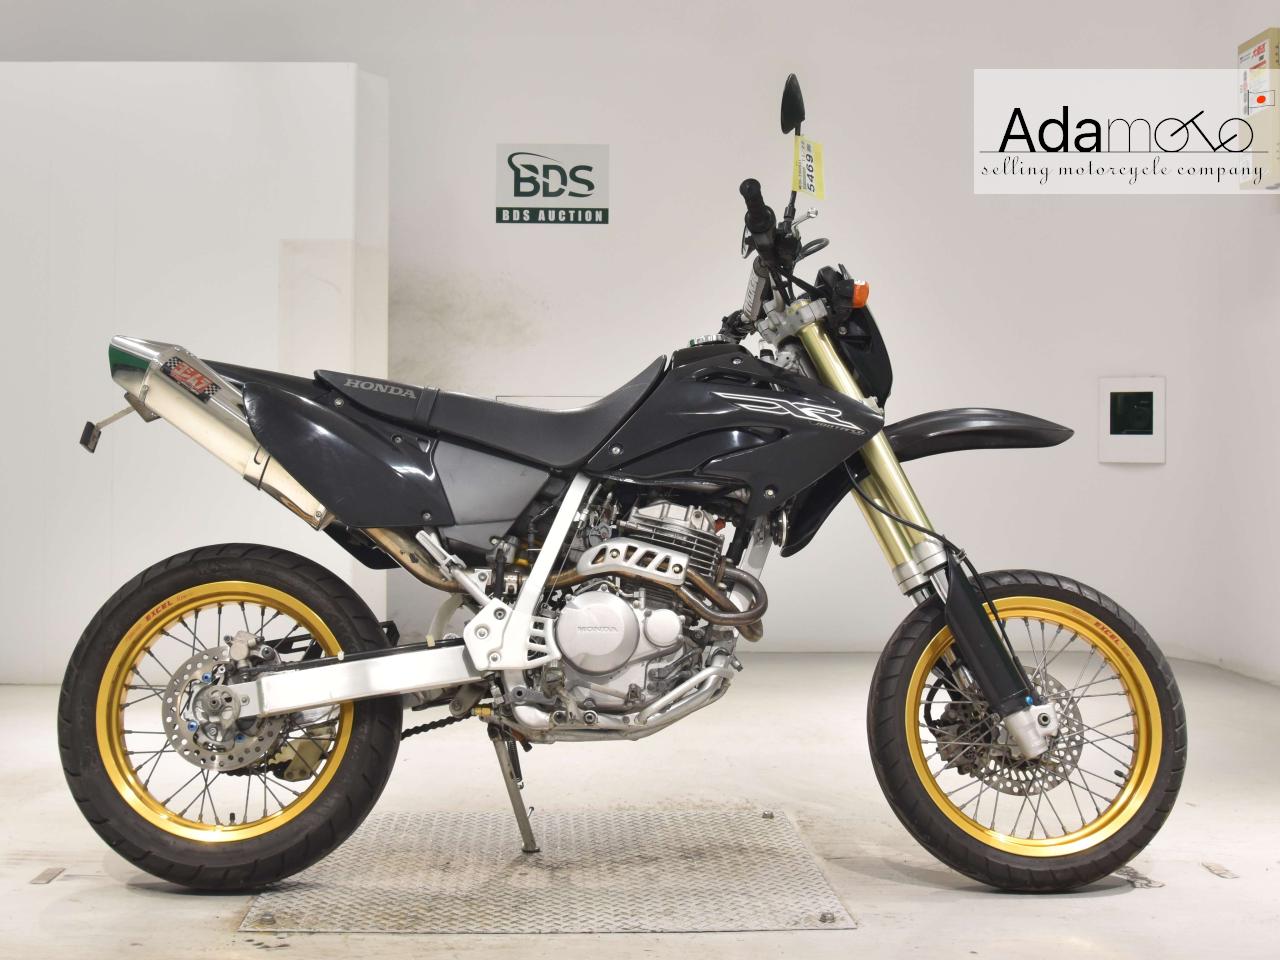 Honda XR250 MOTARD - Adamoto - Motorcycles from Japan